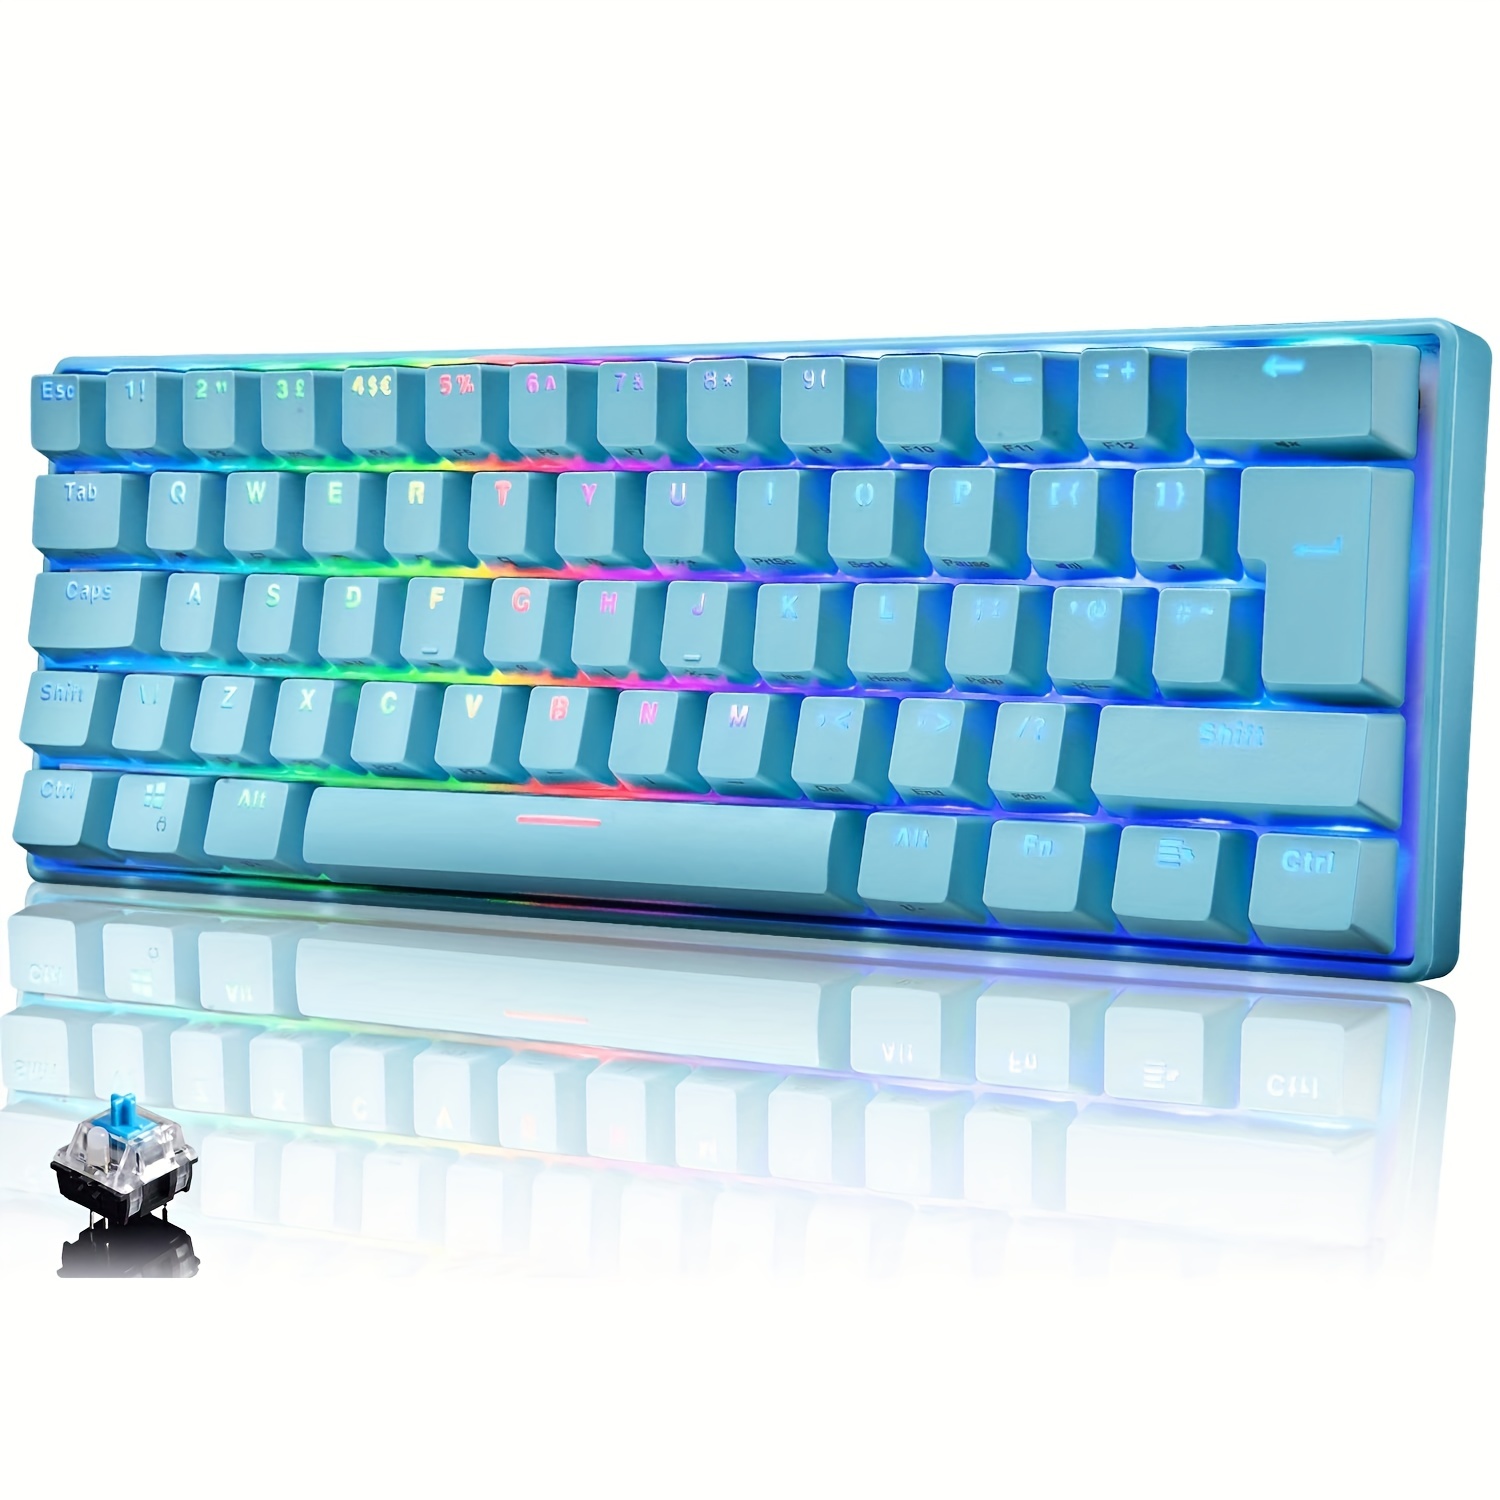 Wired 60% Mechanical Gaming Keyboard RGB Backlit Type C  PS4,Xbox,PC,Laptop,MAC